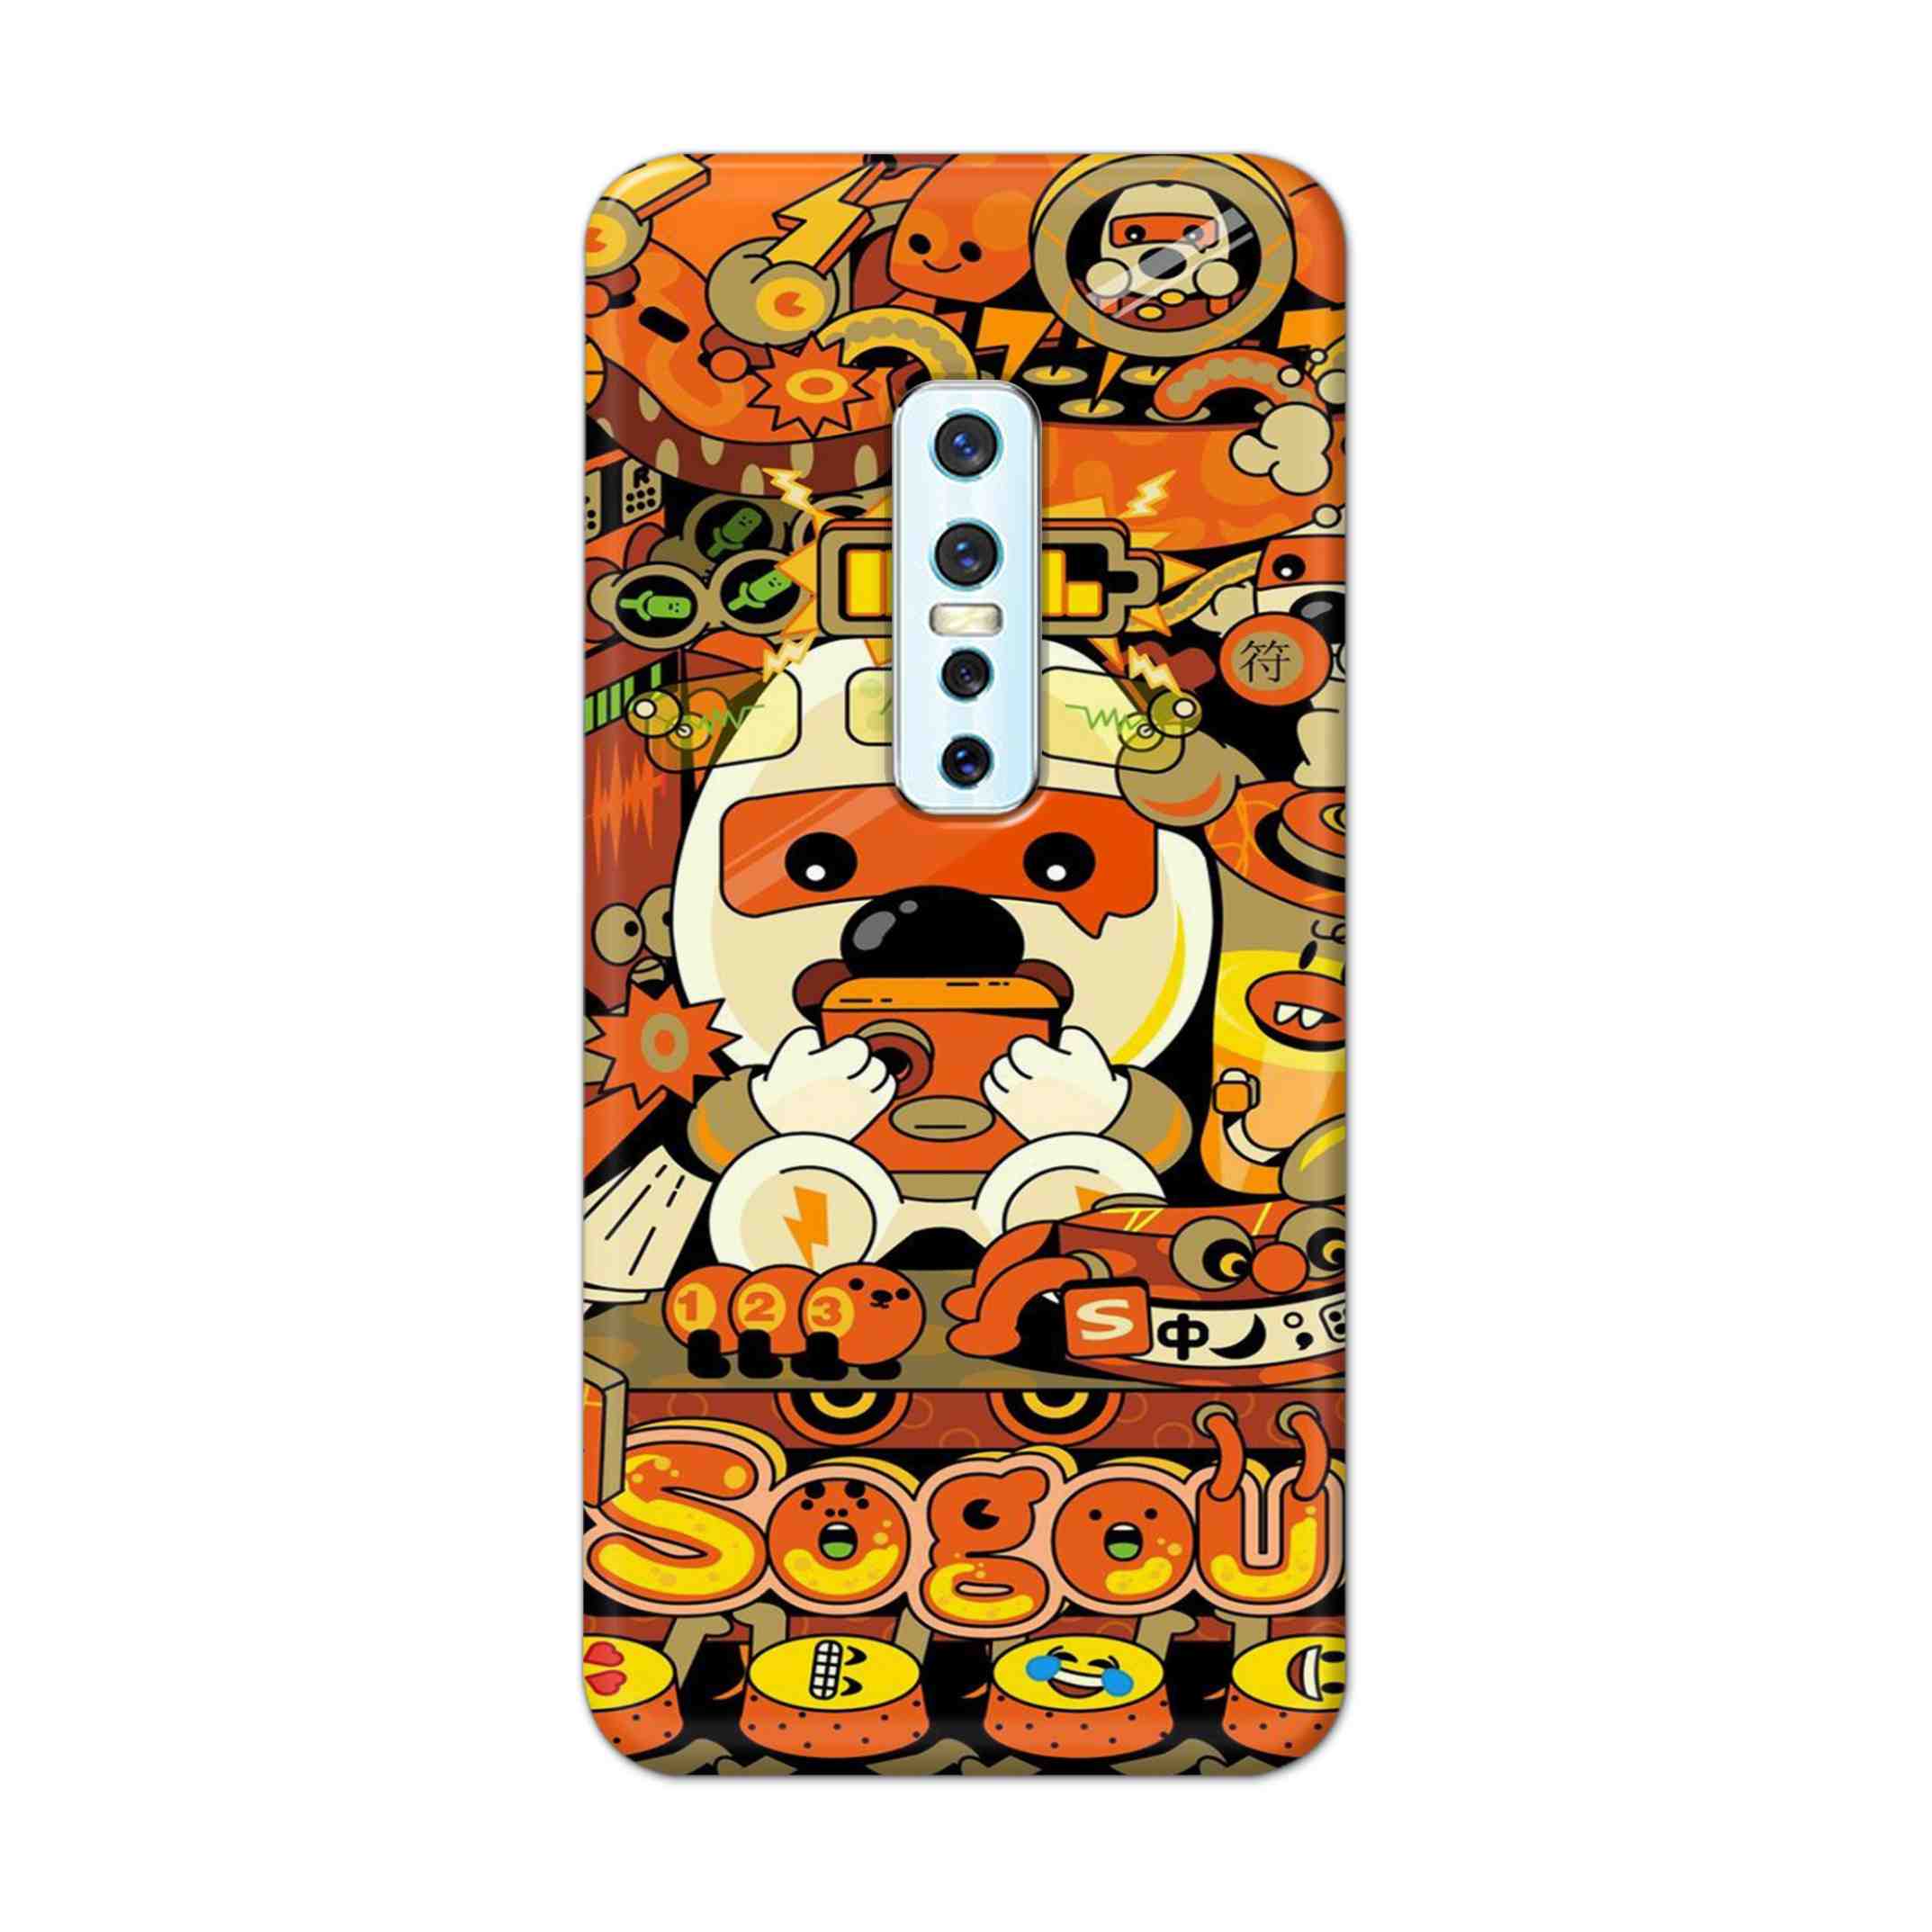 Buy Sogou Hard Back Mobile Phone Case Cover For Vivo V17 Pro Online